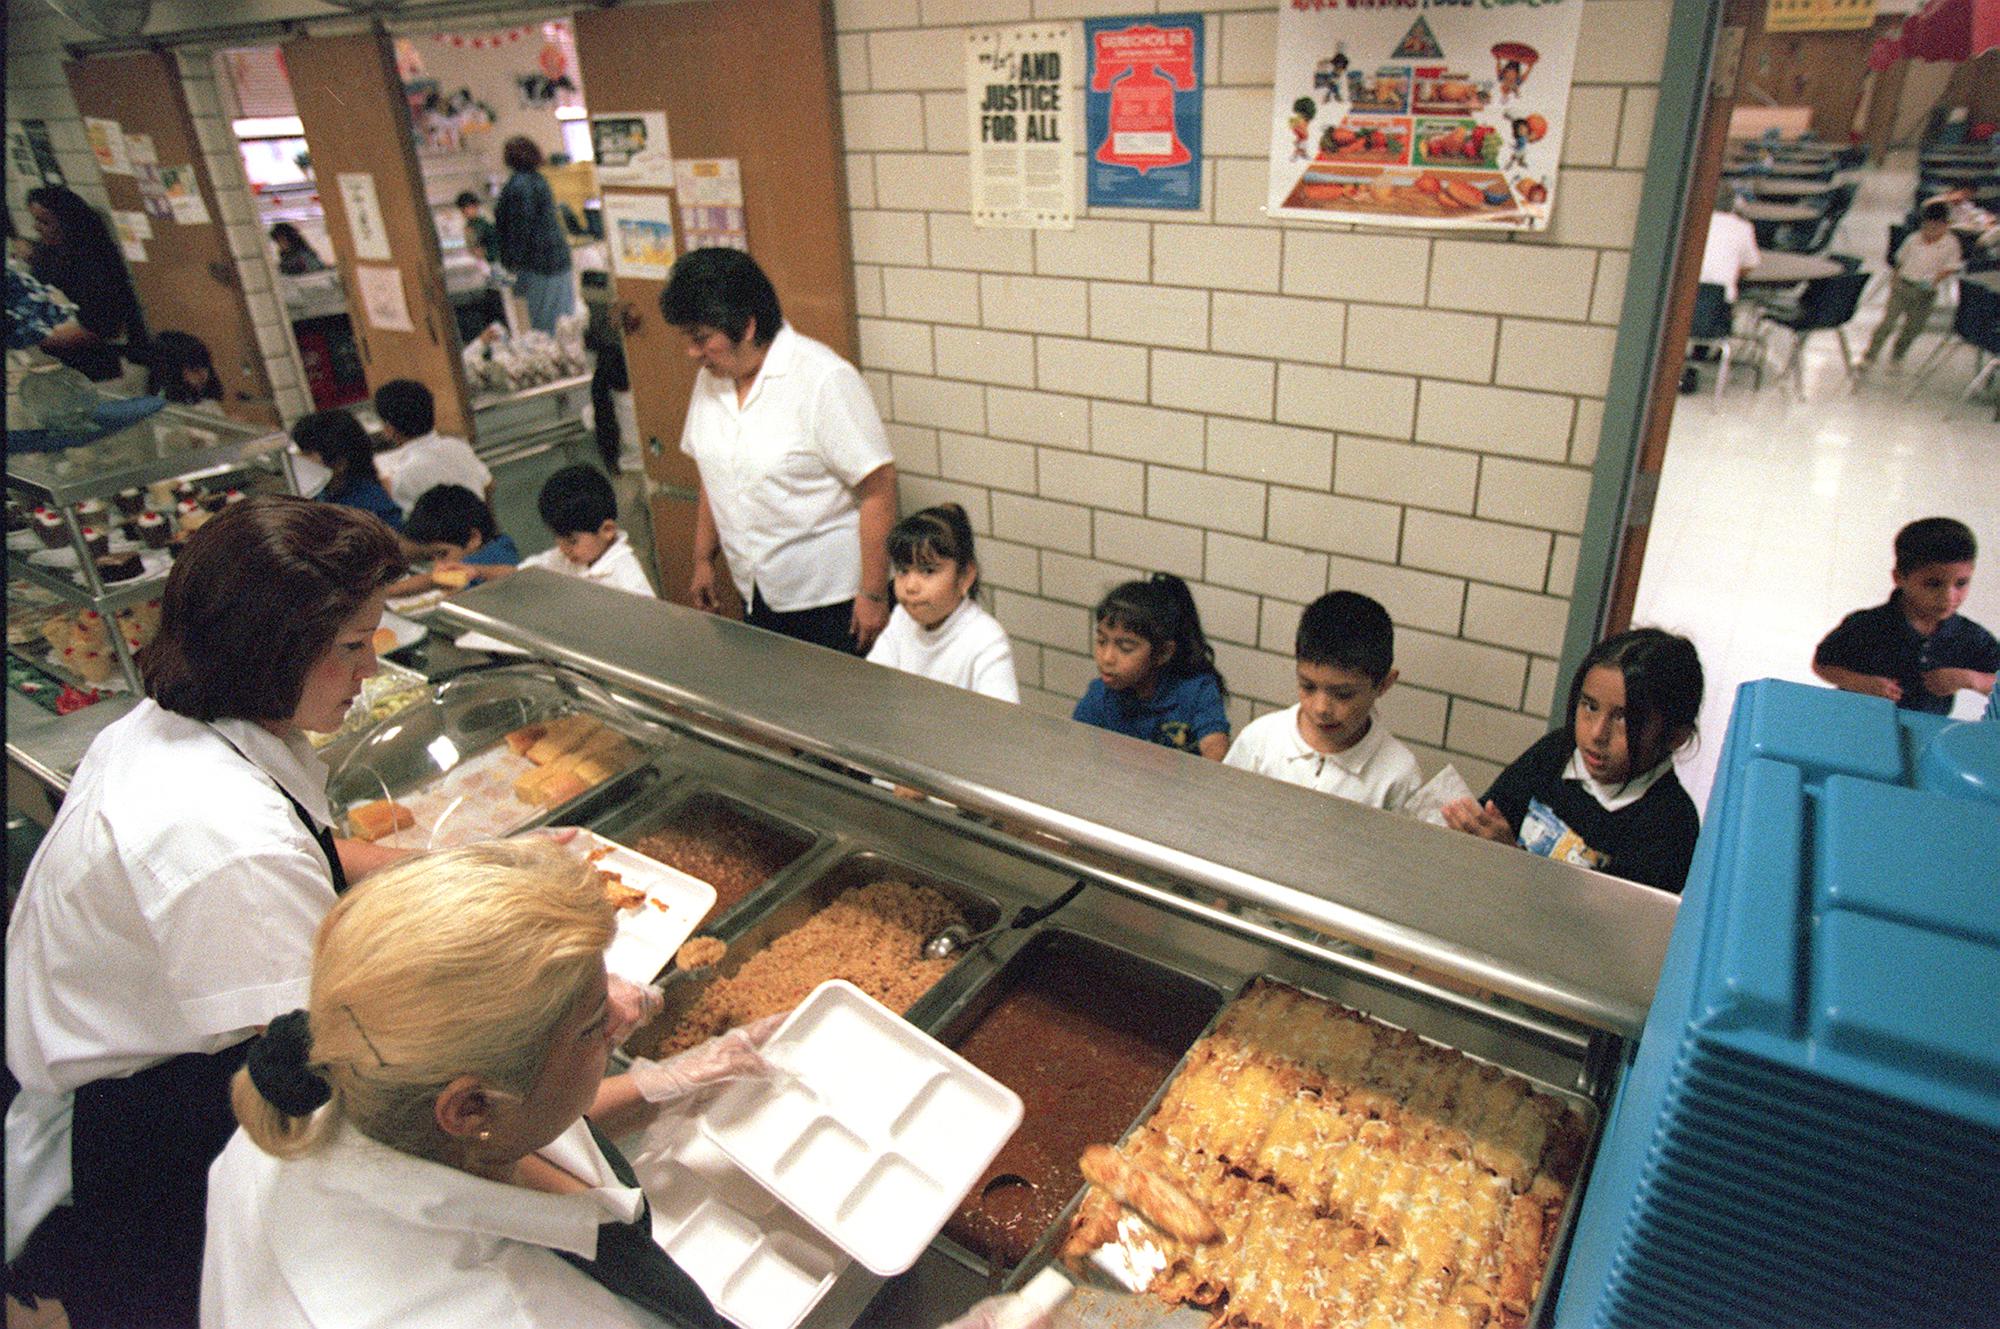 1960s school cafeteria favorites